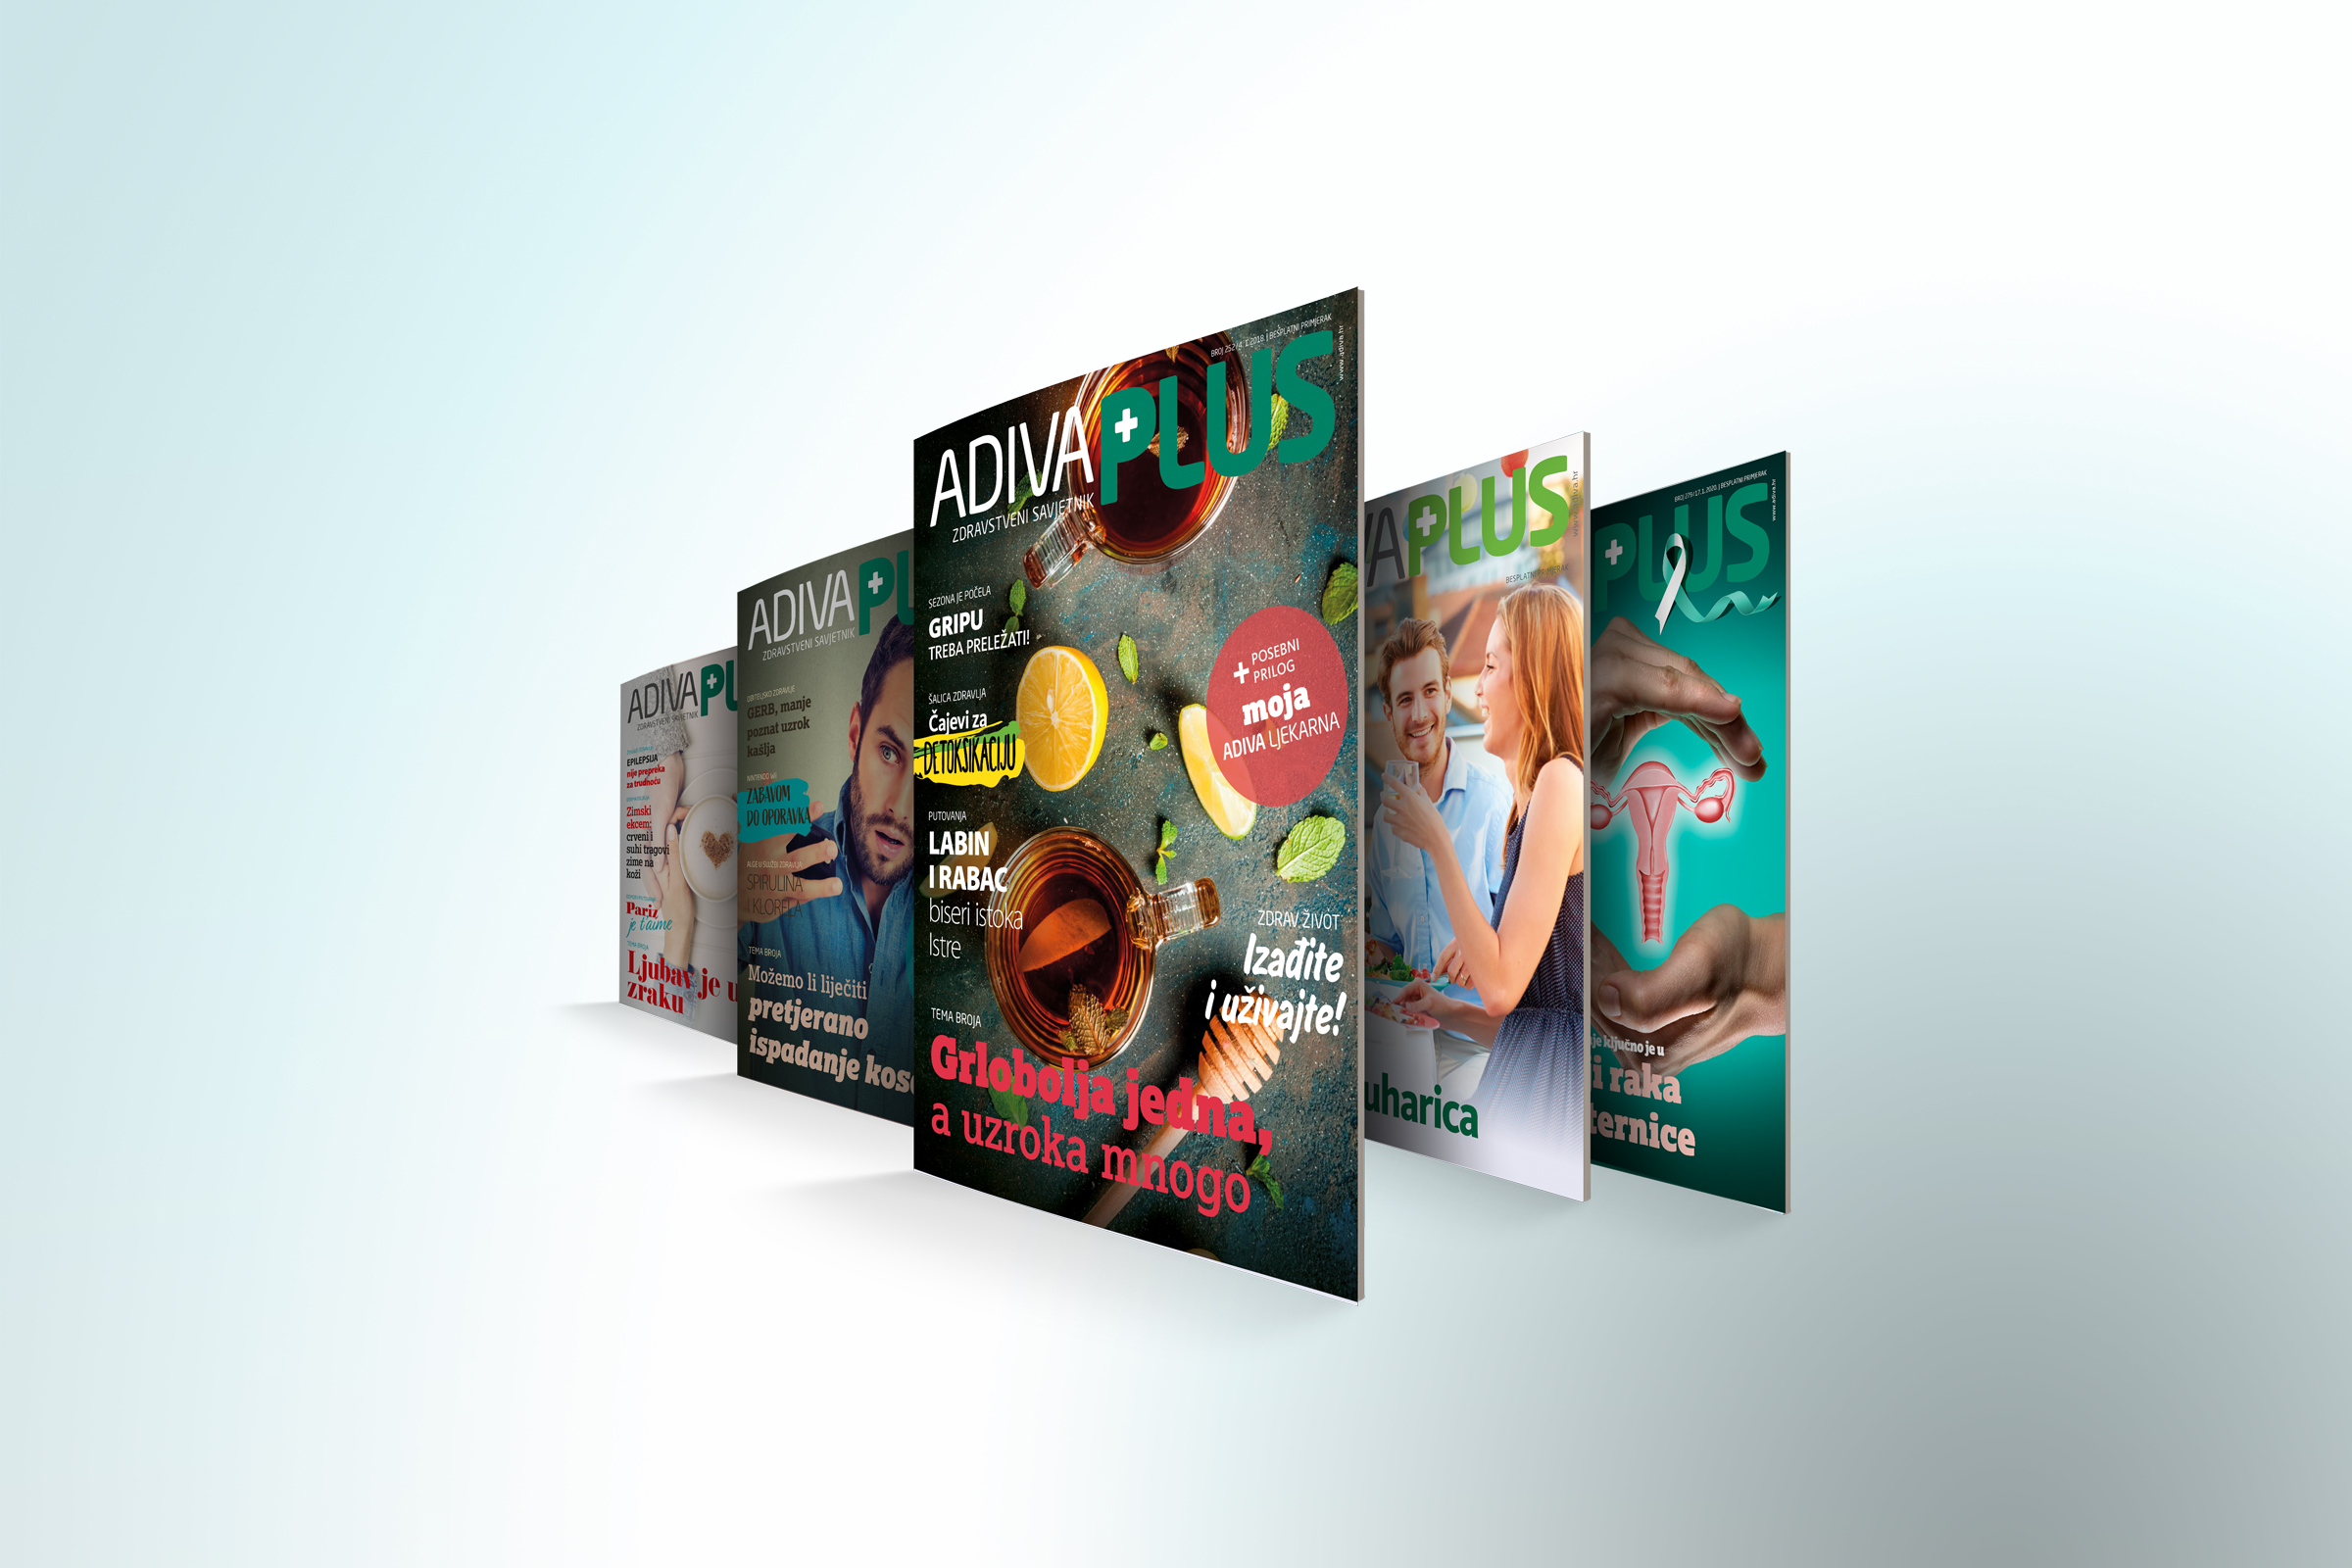 Editing of the specialized bi-weekly magazine of ADIVA pharmacies